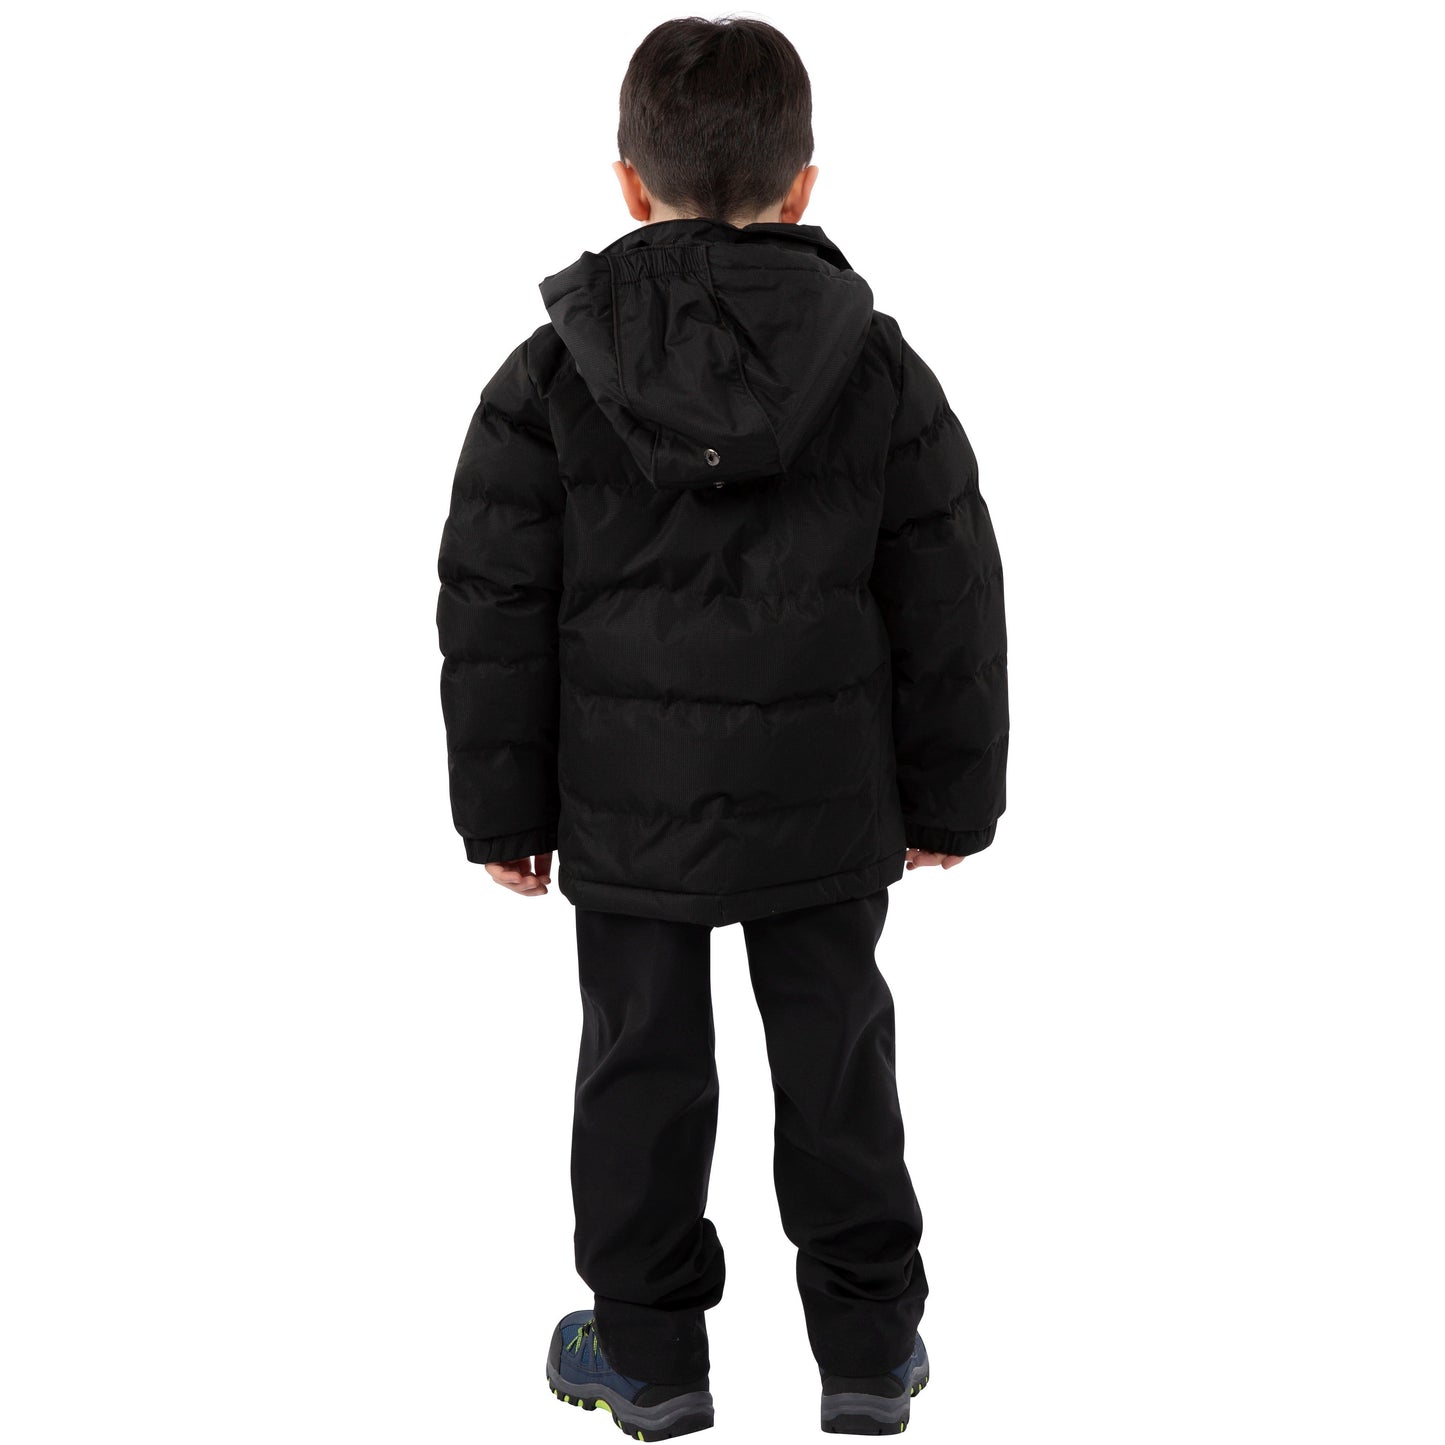 Tuff Boys Padded Casual Jacket in Black